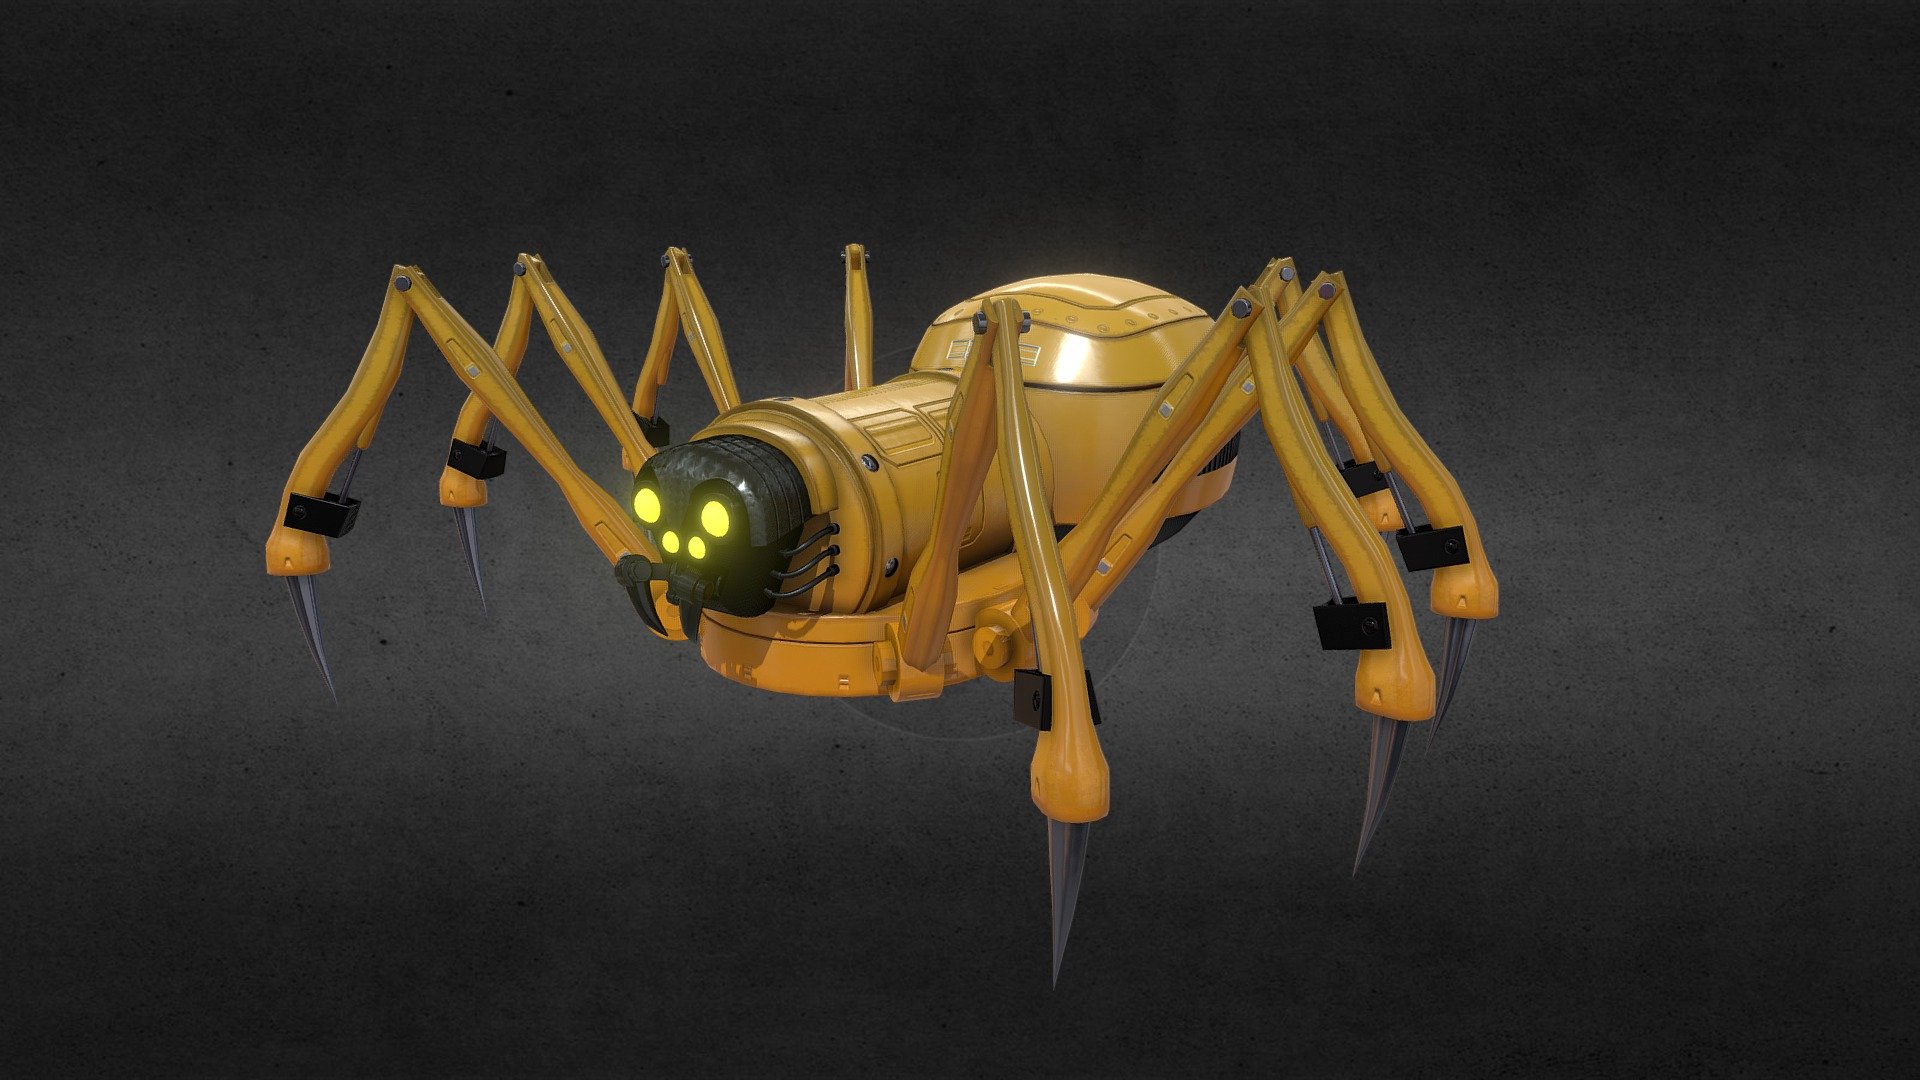 Mechanical Spider